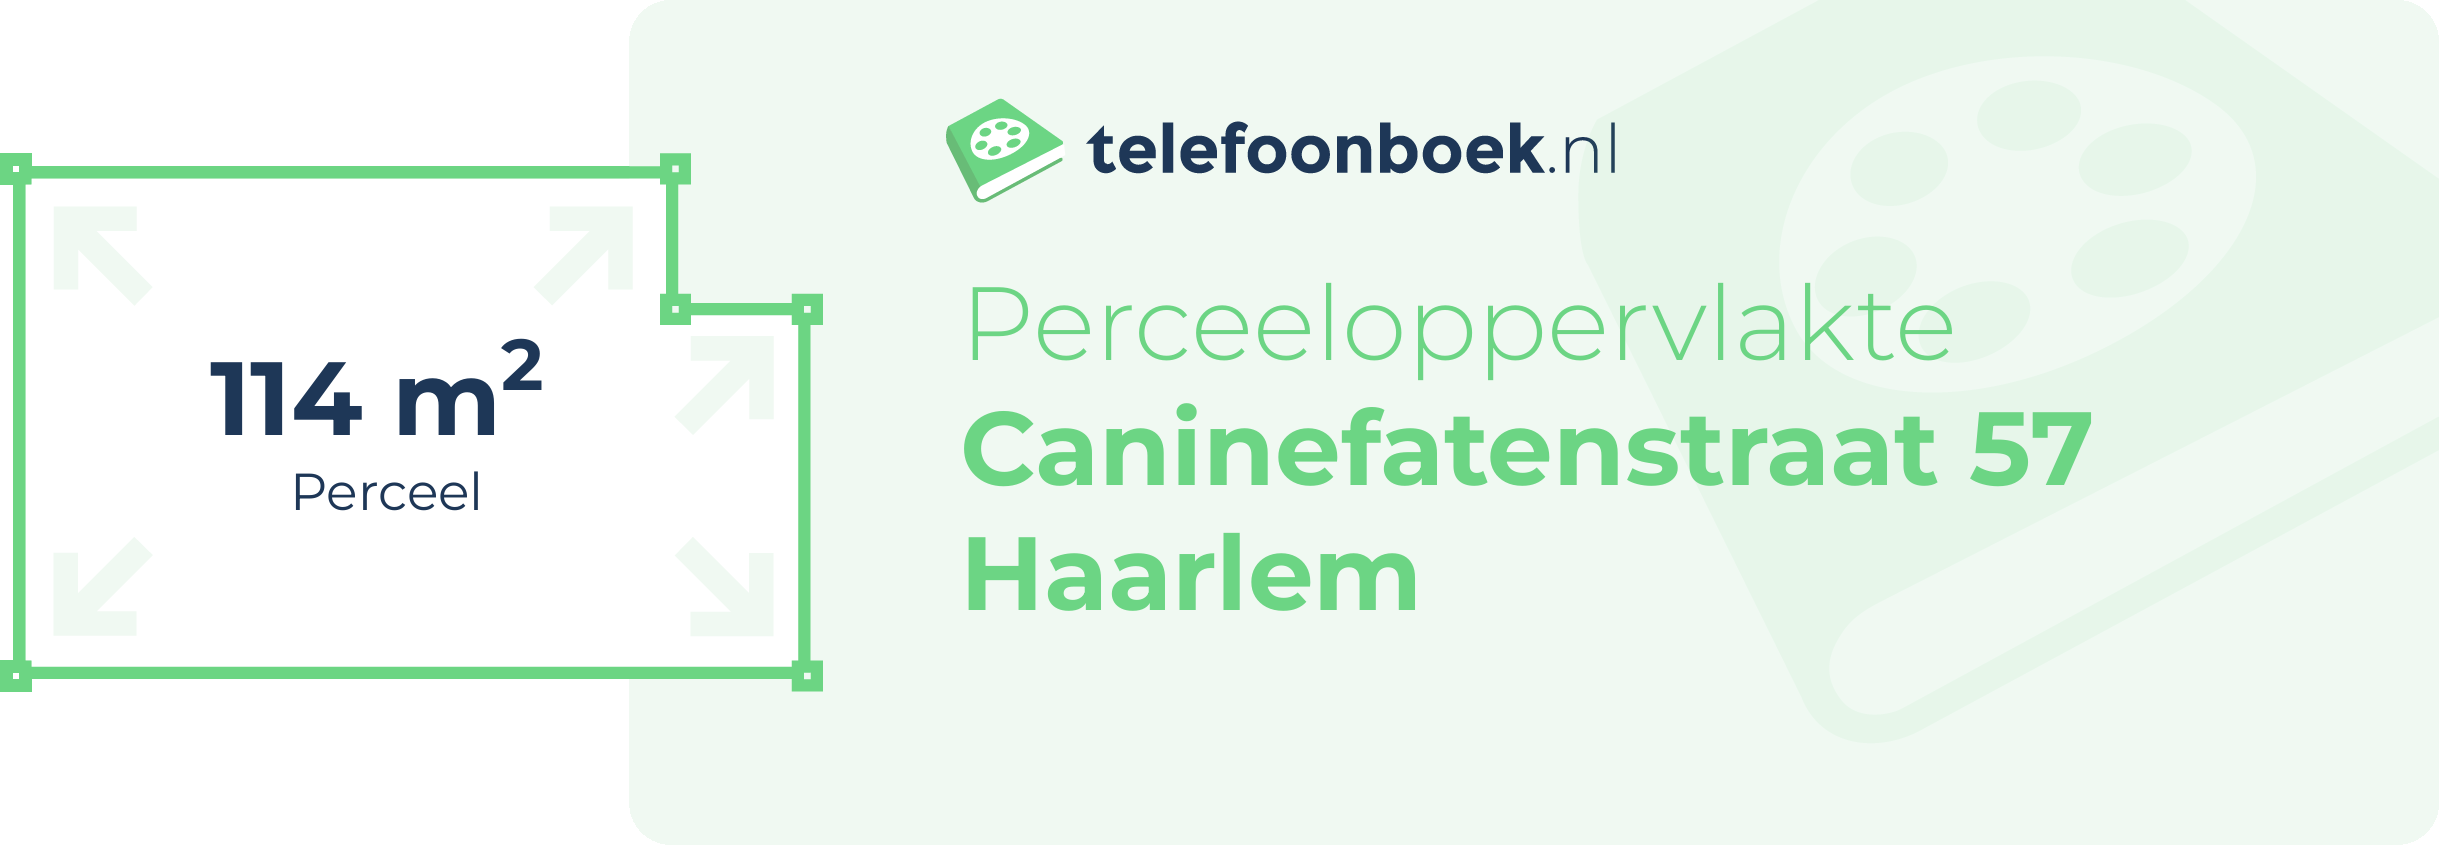 Perceeloppervlakte Caninefatenstraat 57 Haarlem